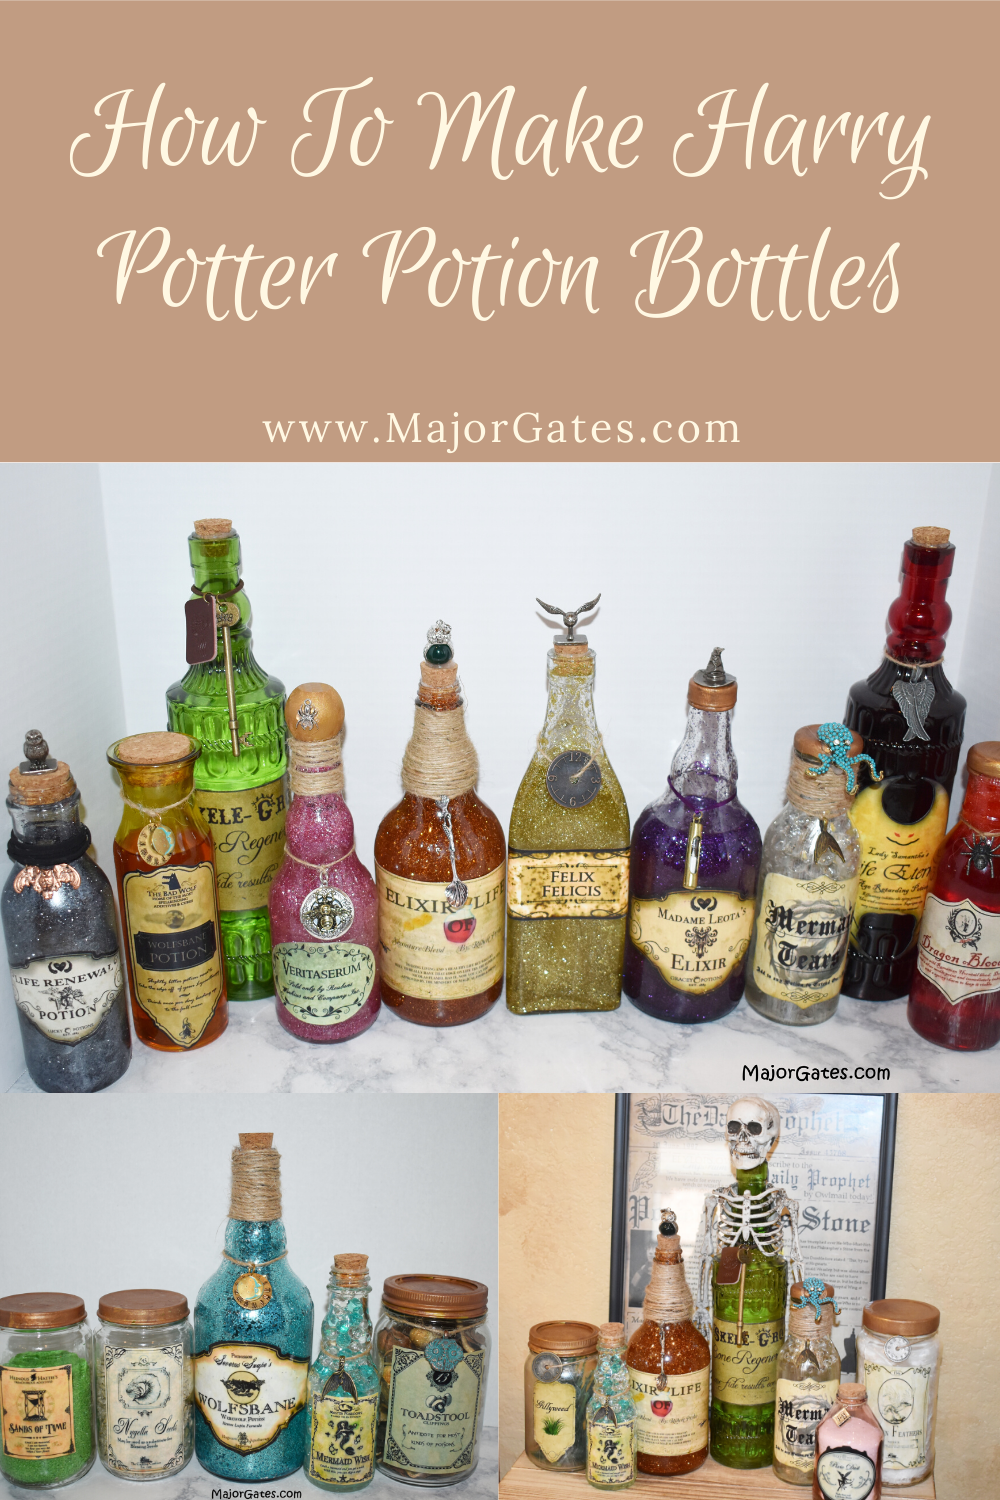 Harry Potter Potion Bottles